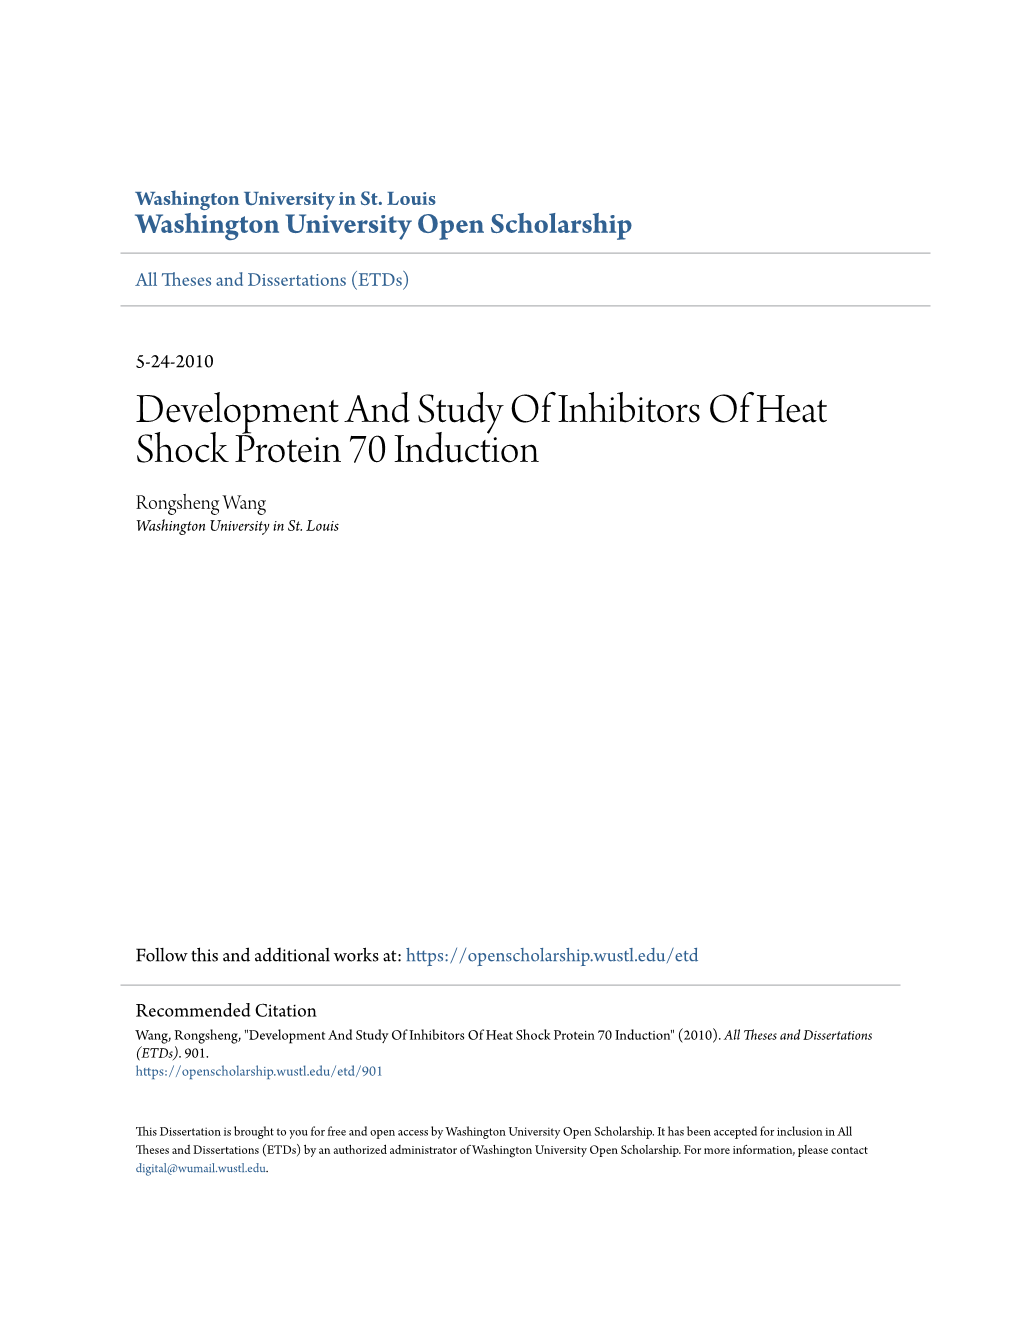 Development and Study of Inhibitors of Heat Shock Protein 70 Induction Rongsheng Wang Washington University in St